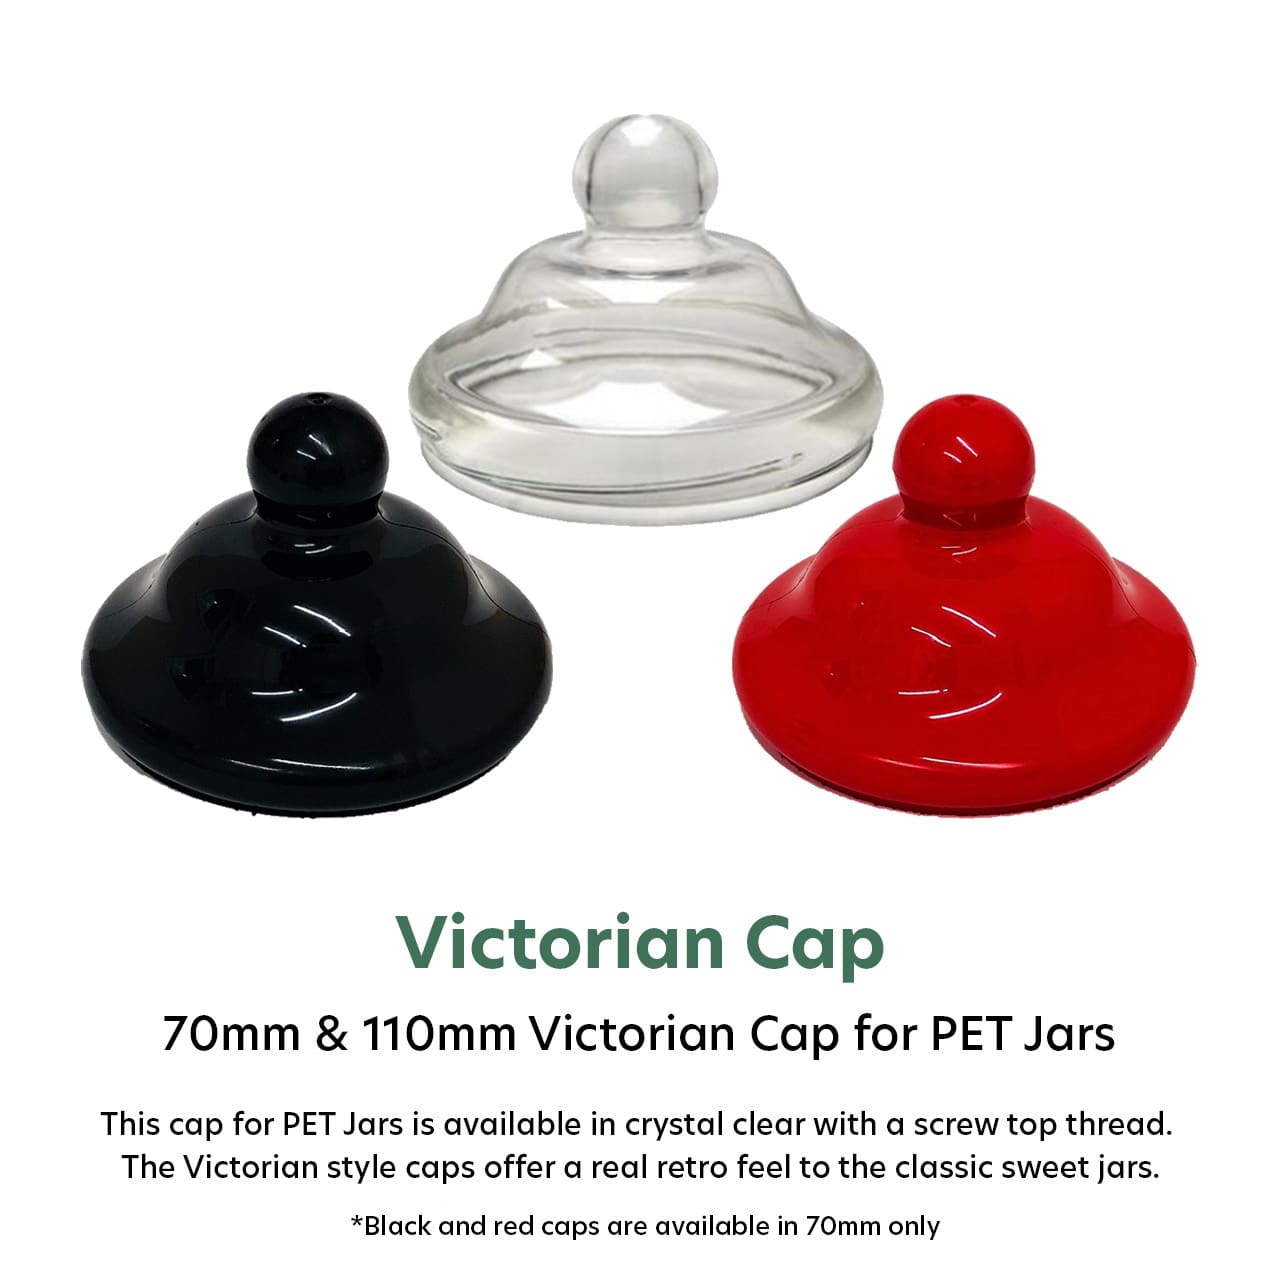 Victorian cap for PET jars2